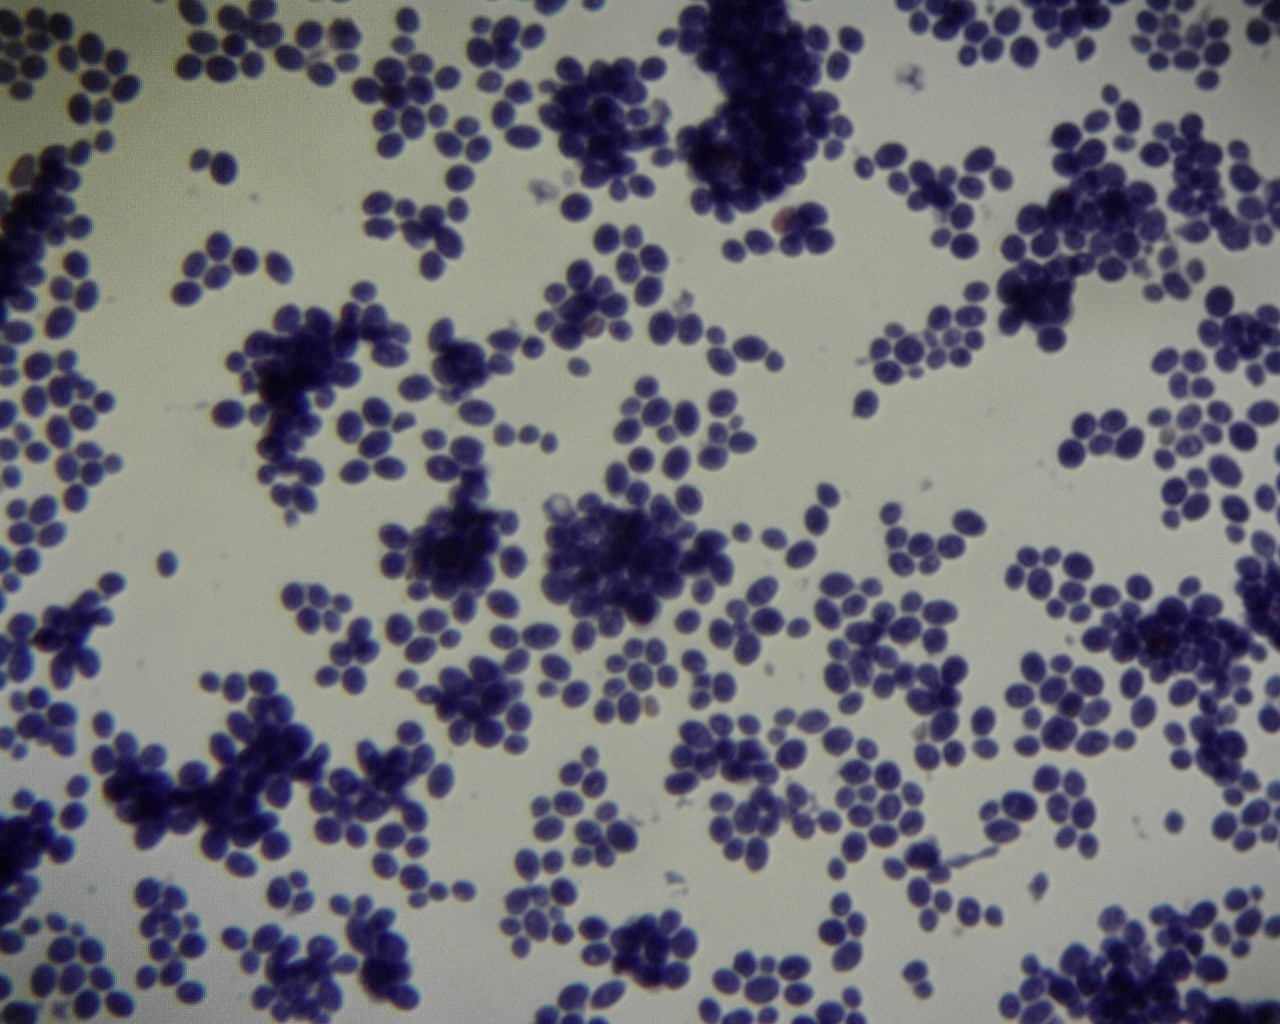 Saccharomyces Cerevisaebudding(b.2-300